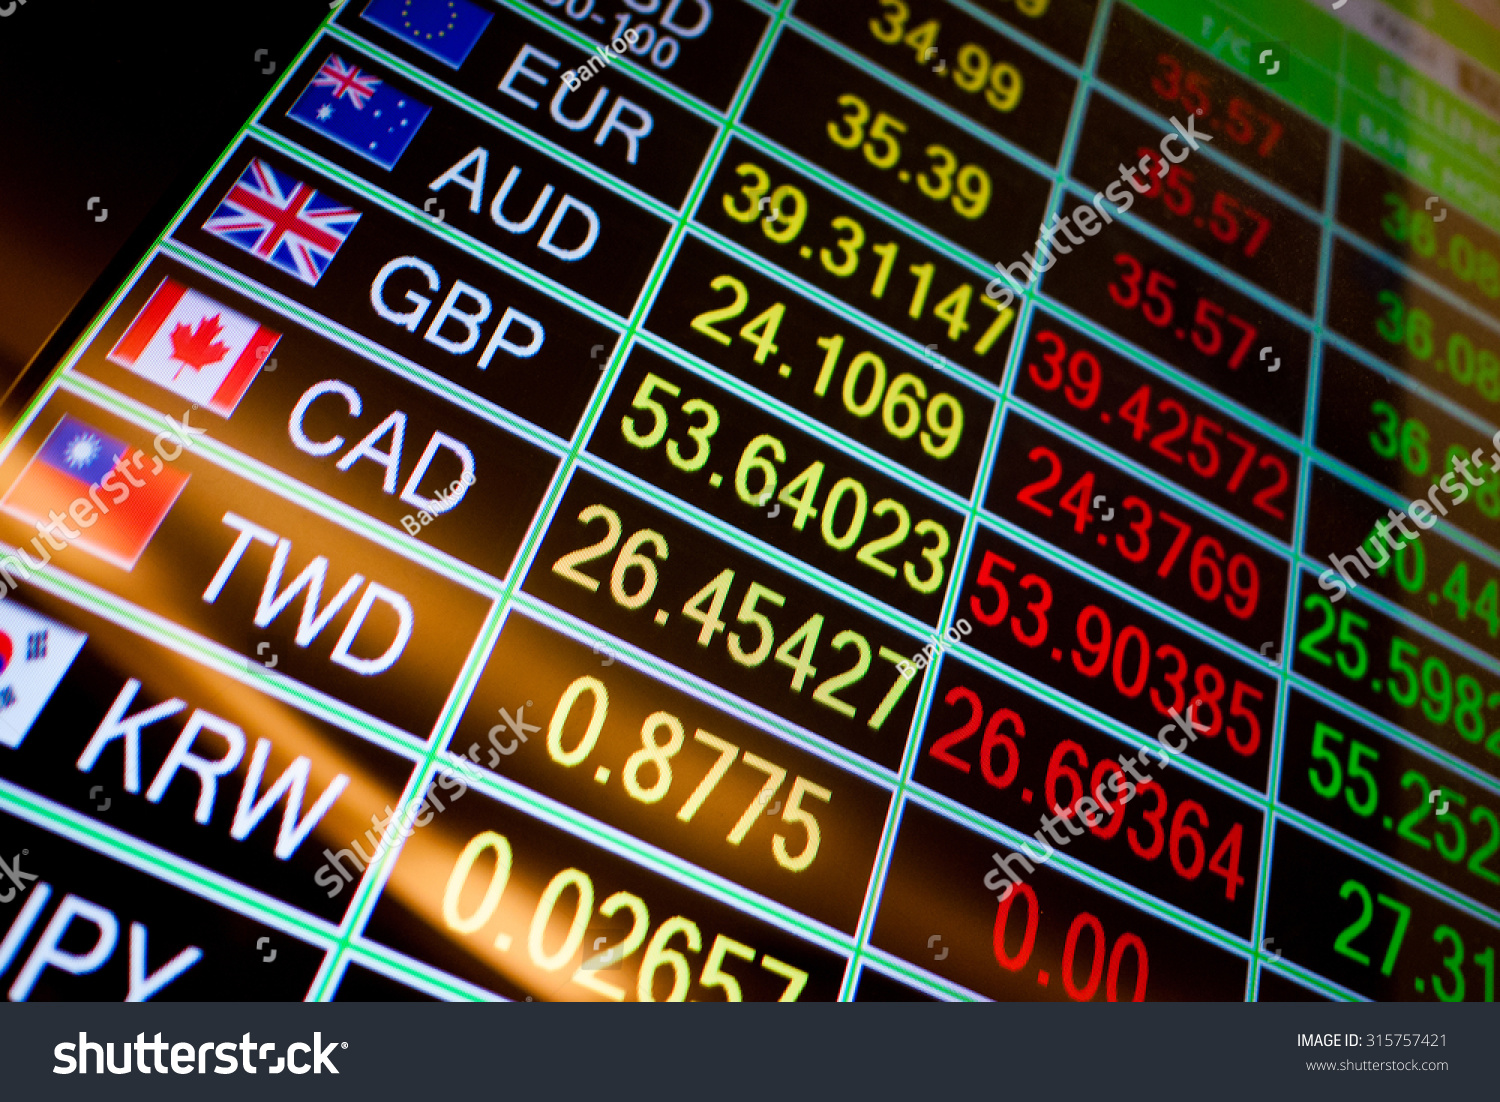 currency exchange rate on digital LED display board #315757421